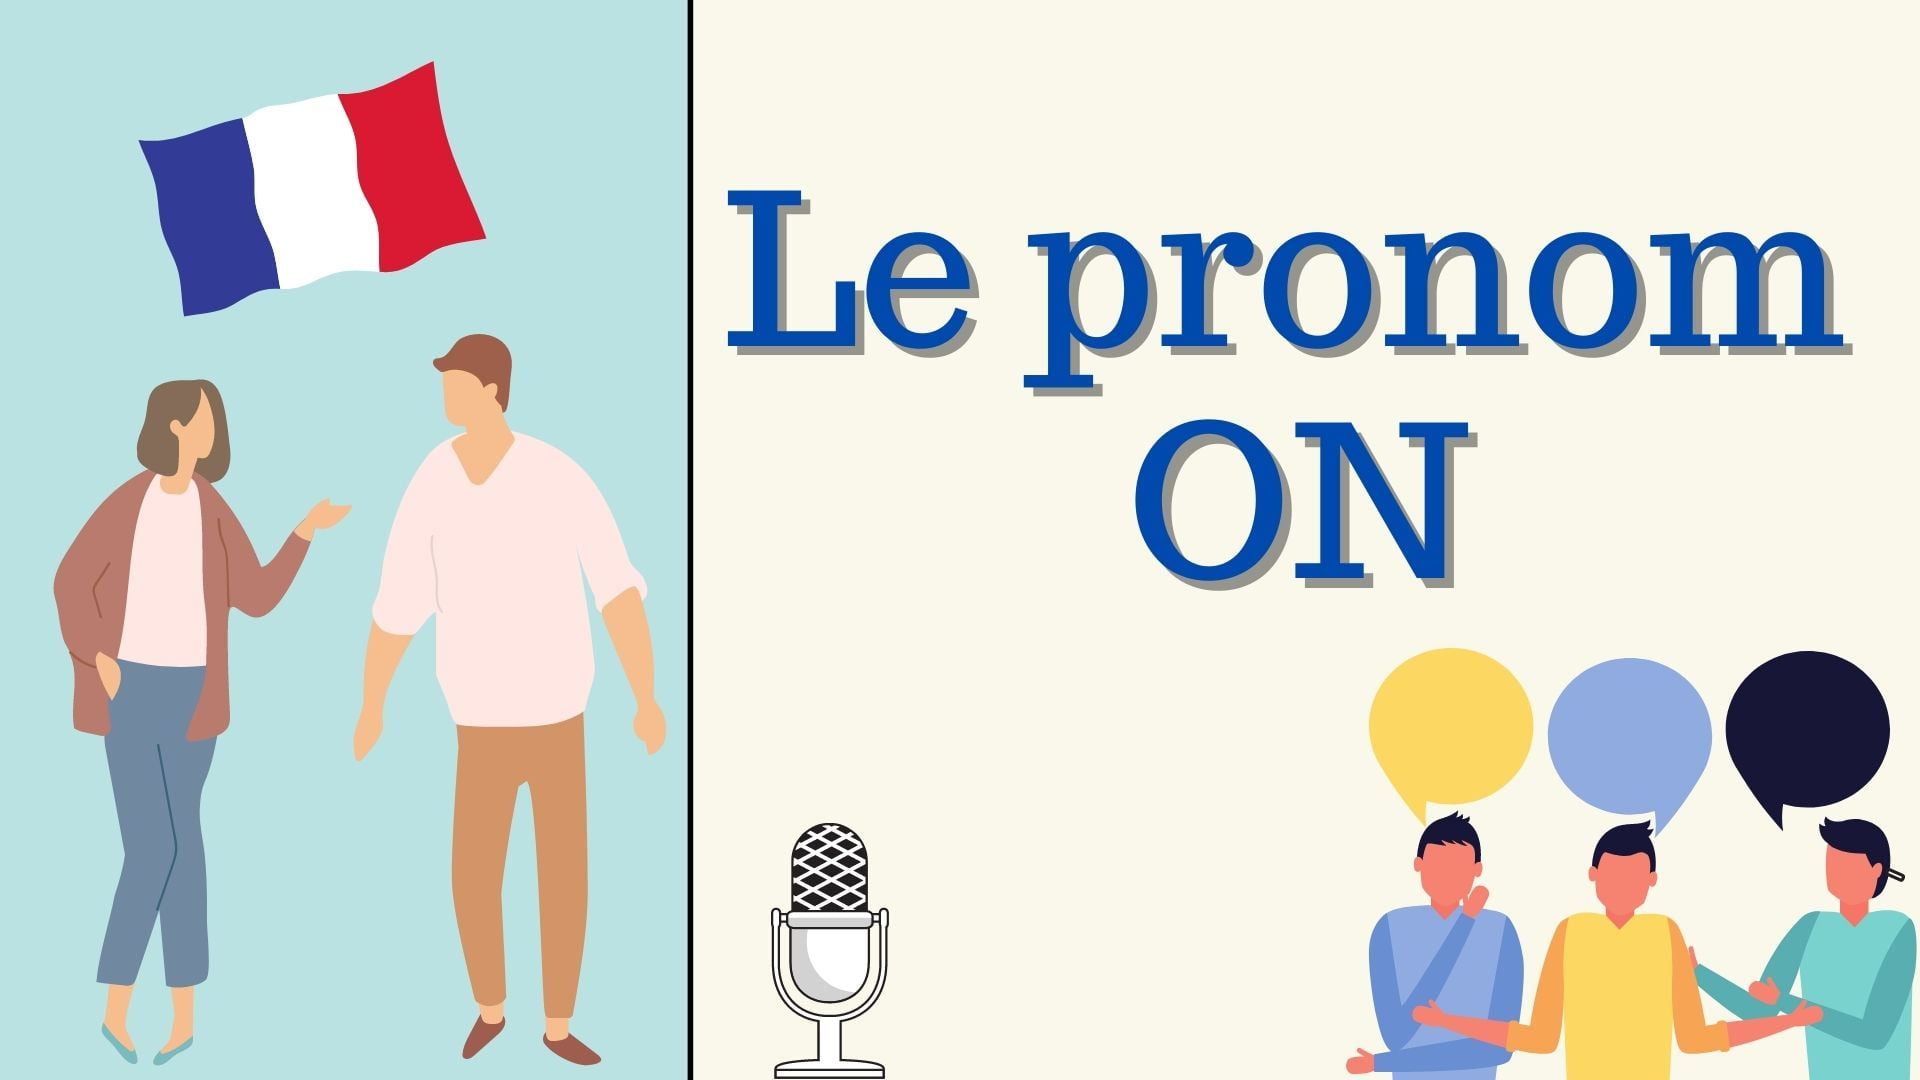 Pronom ON en français - The pronoun ON in French